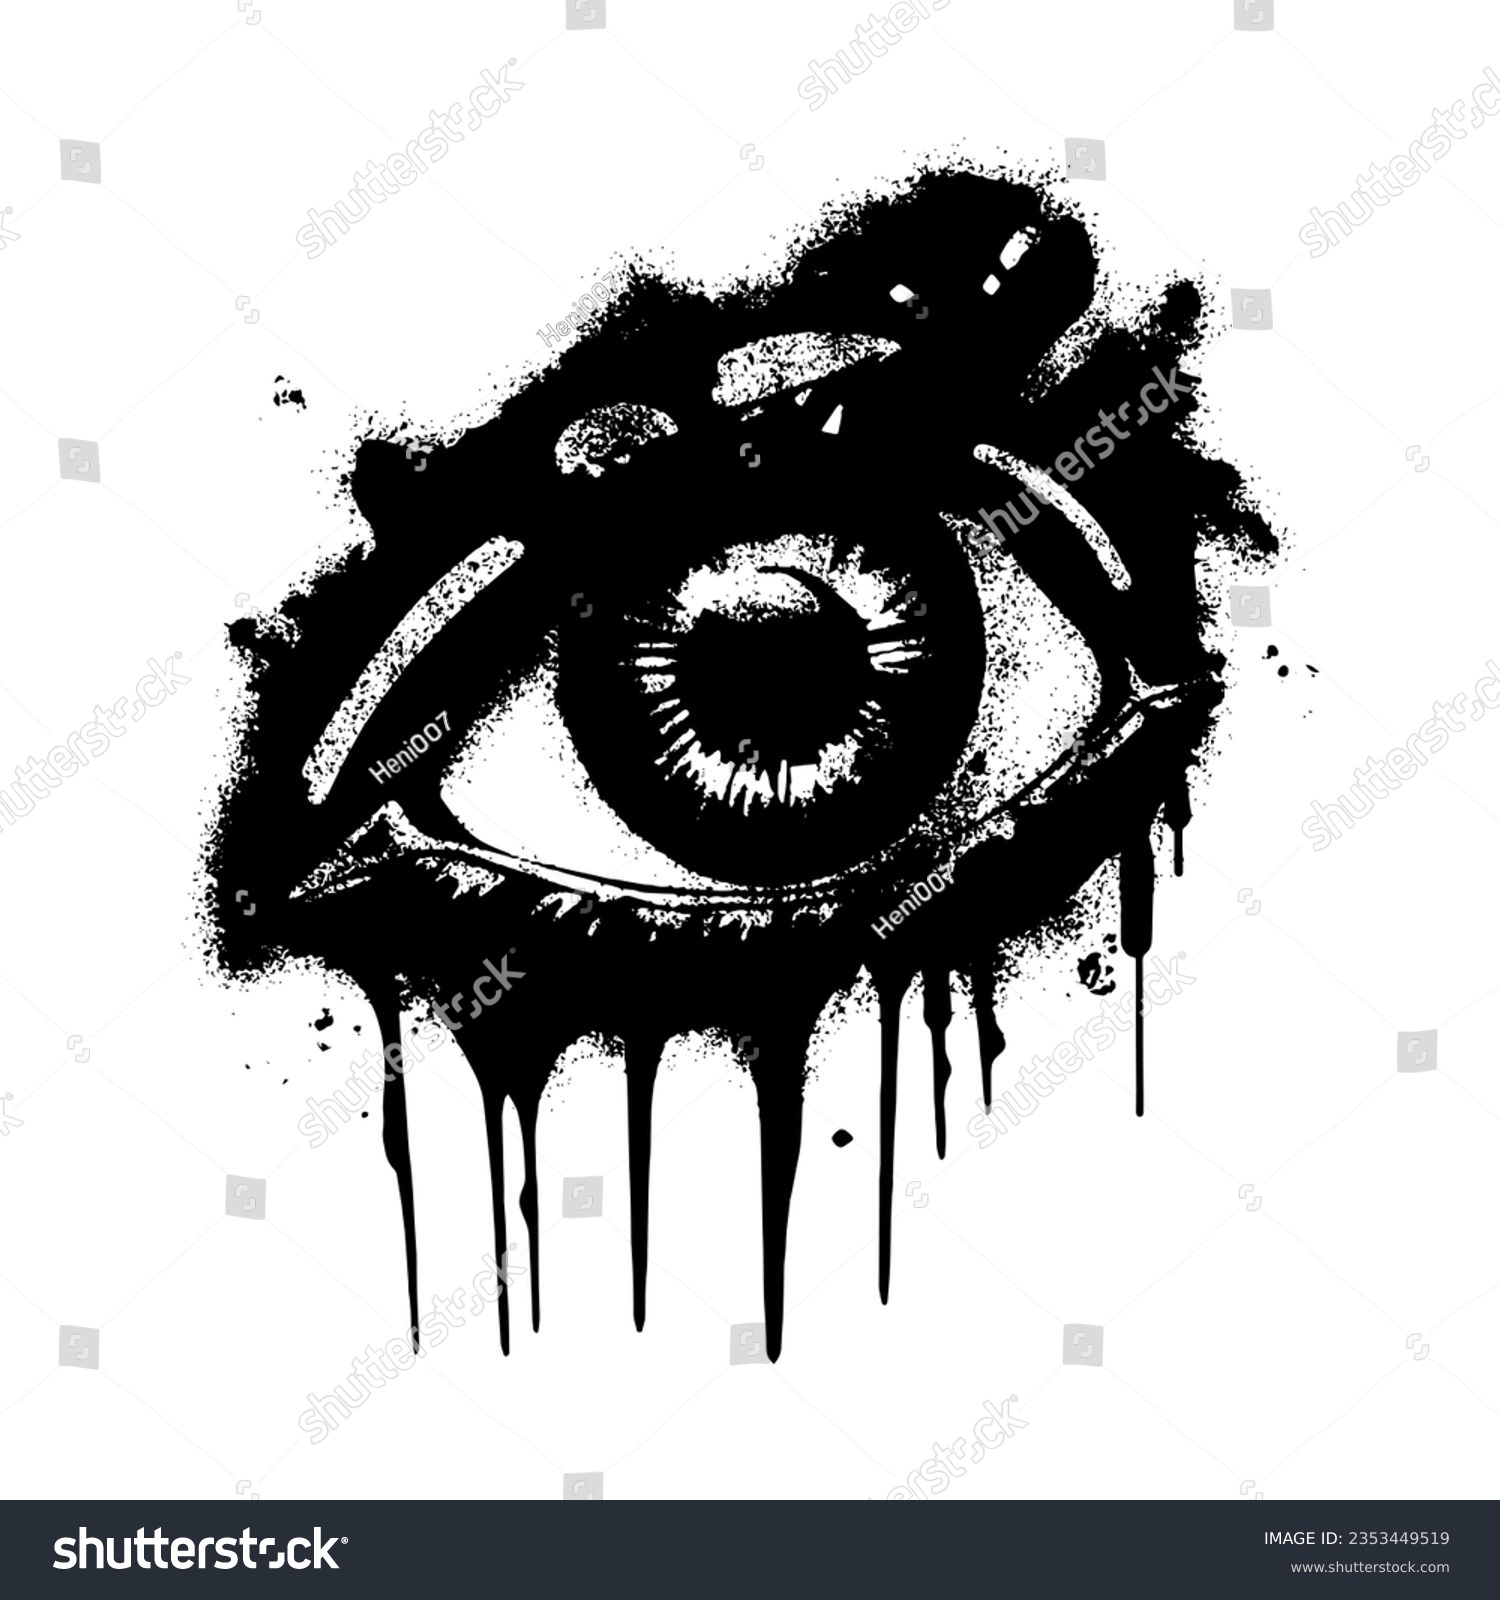 SVG of eyes sprayed in graffiti style. Vector illustration. svg